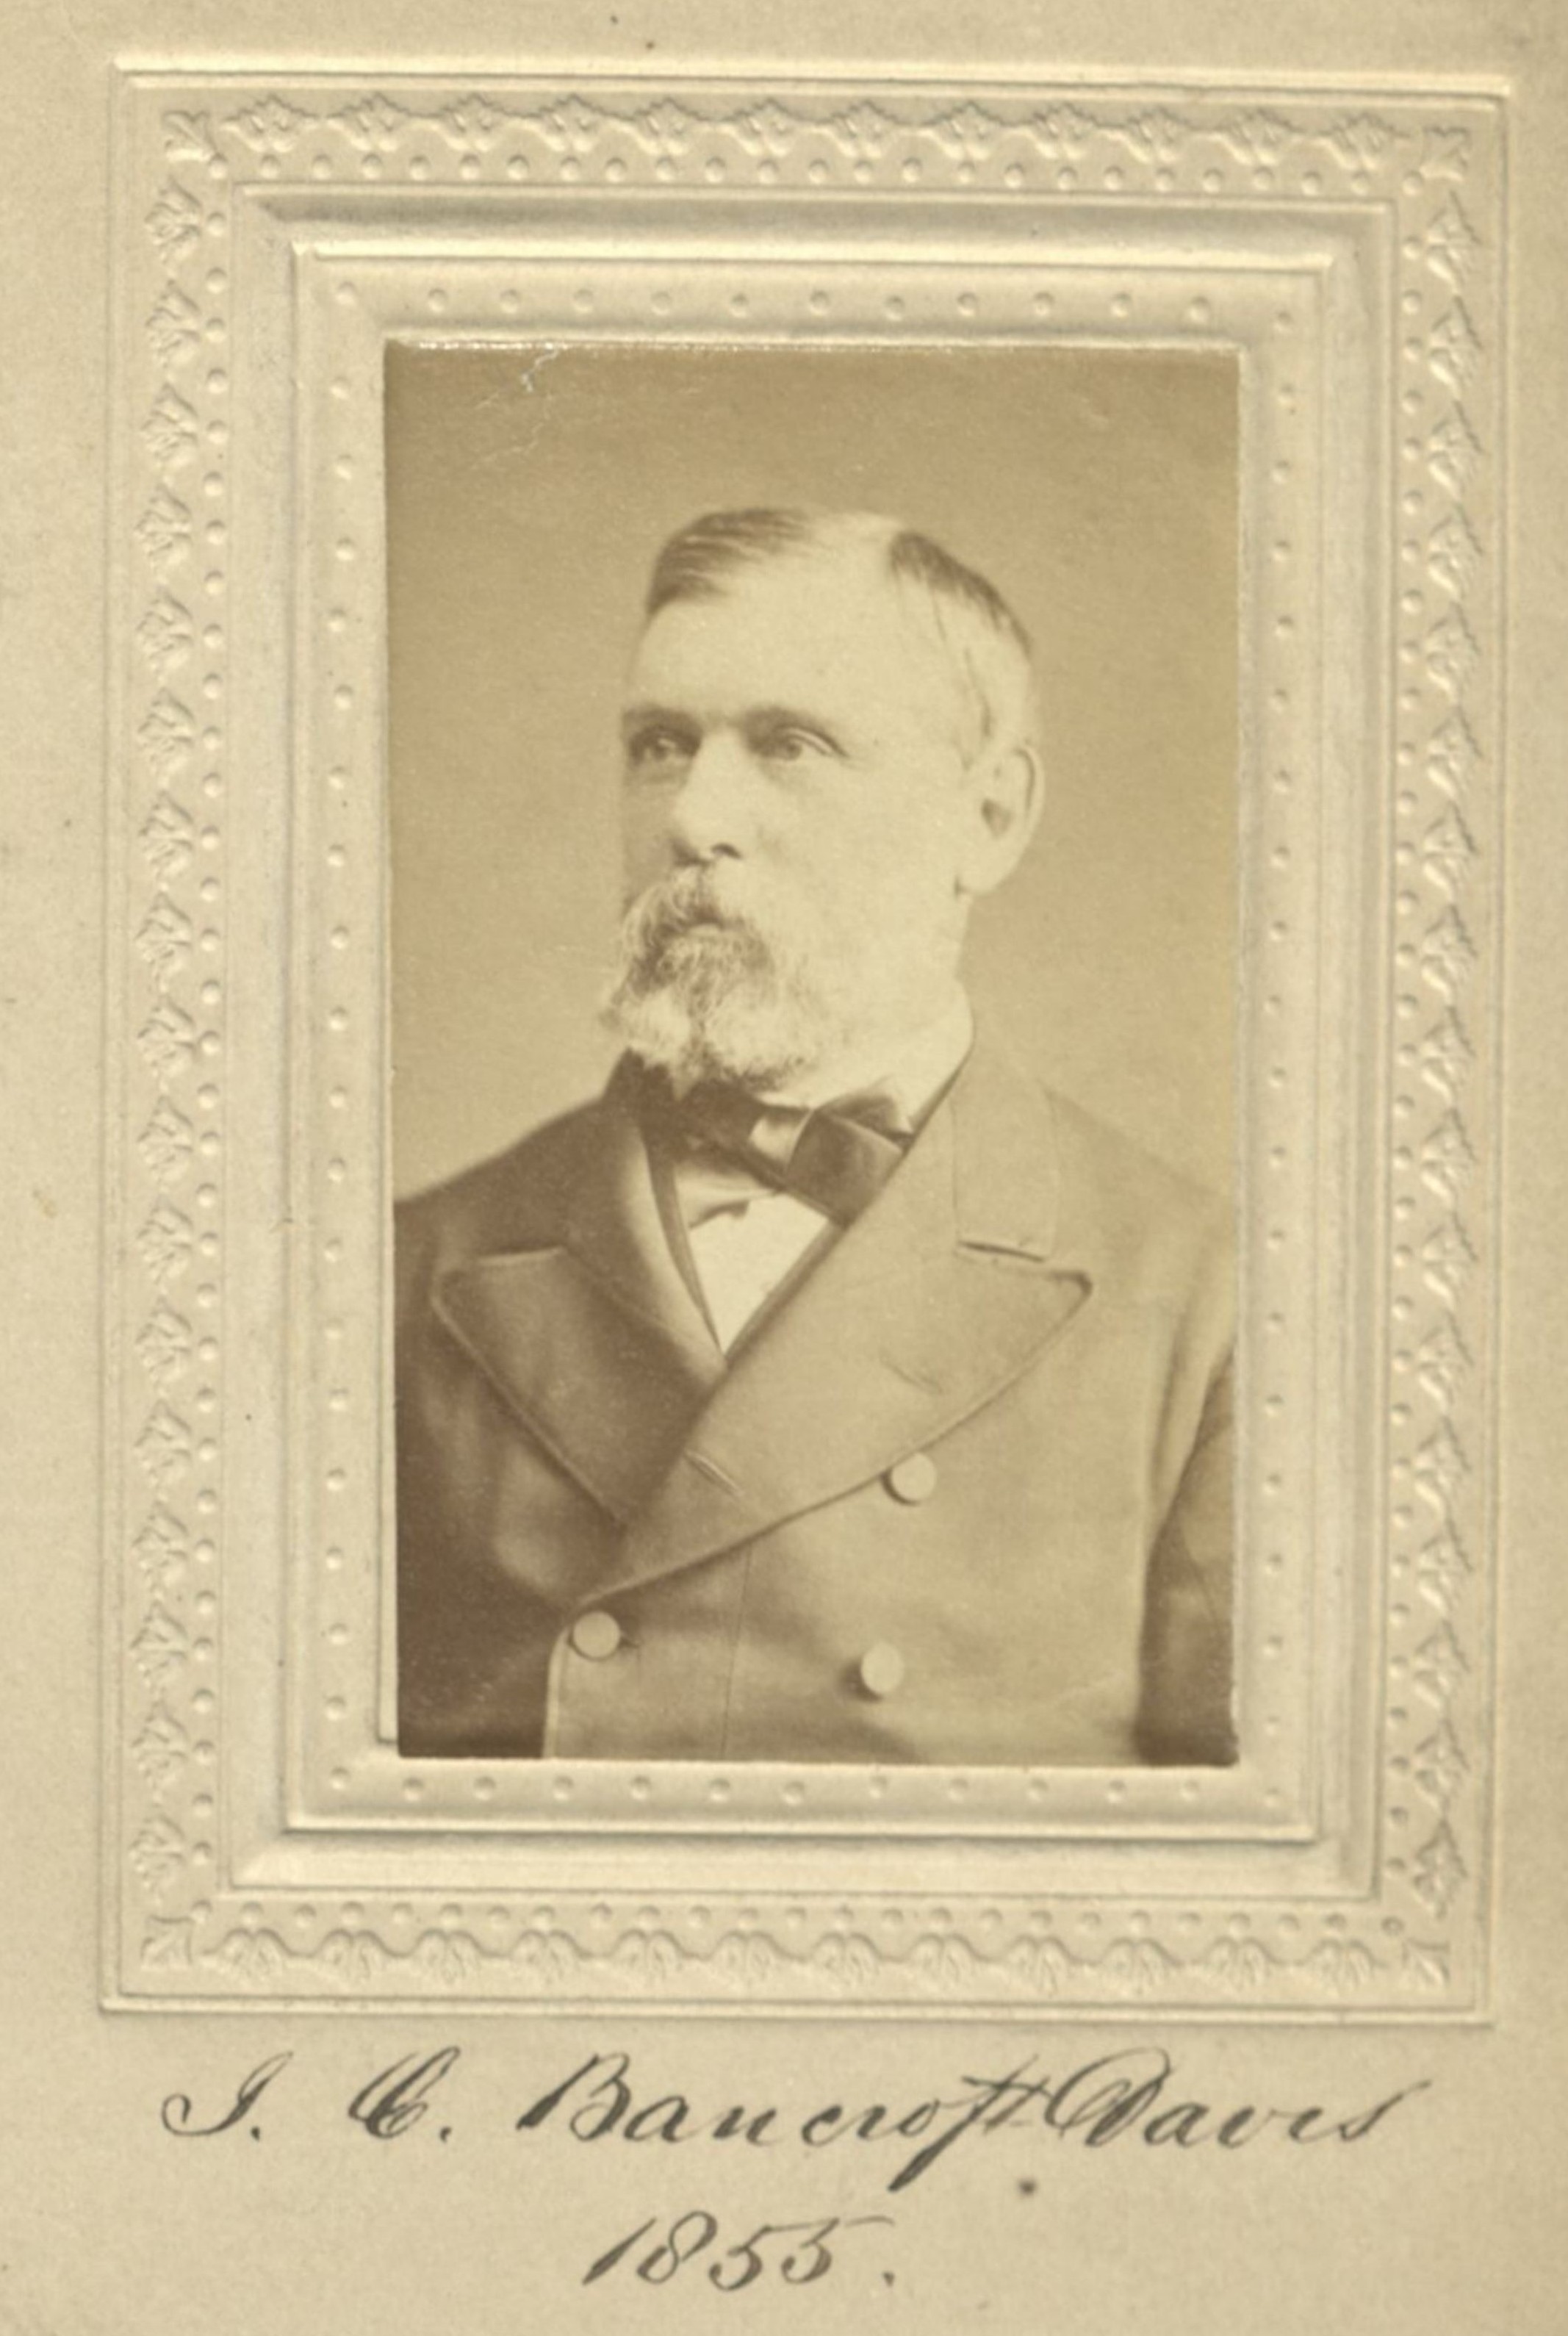 Member portrait of John C. Bancroft Davis